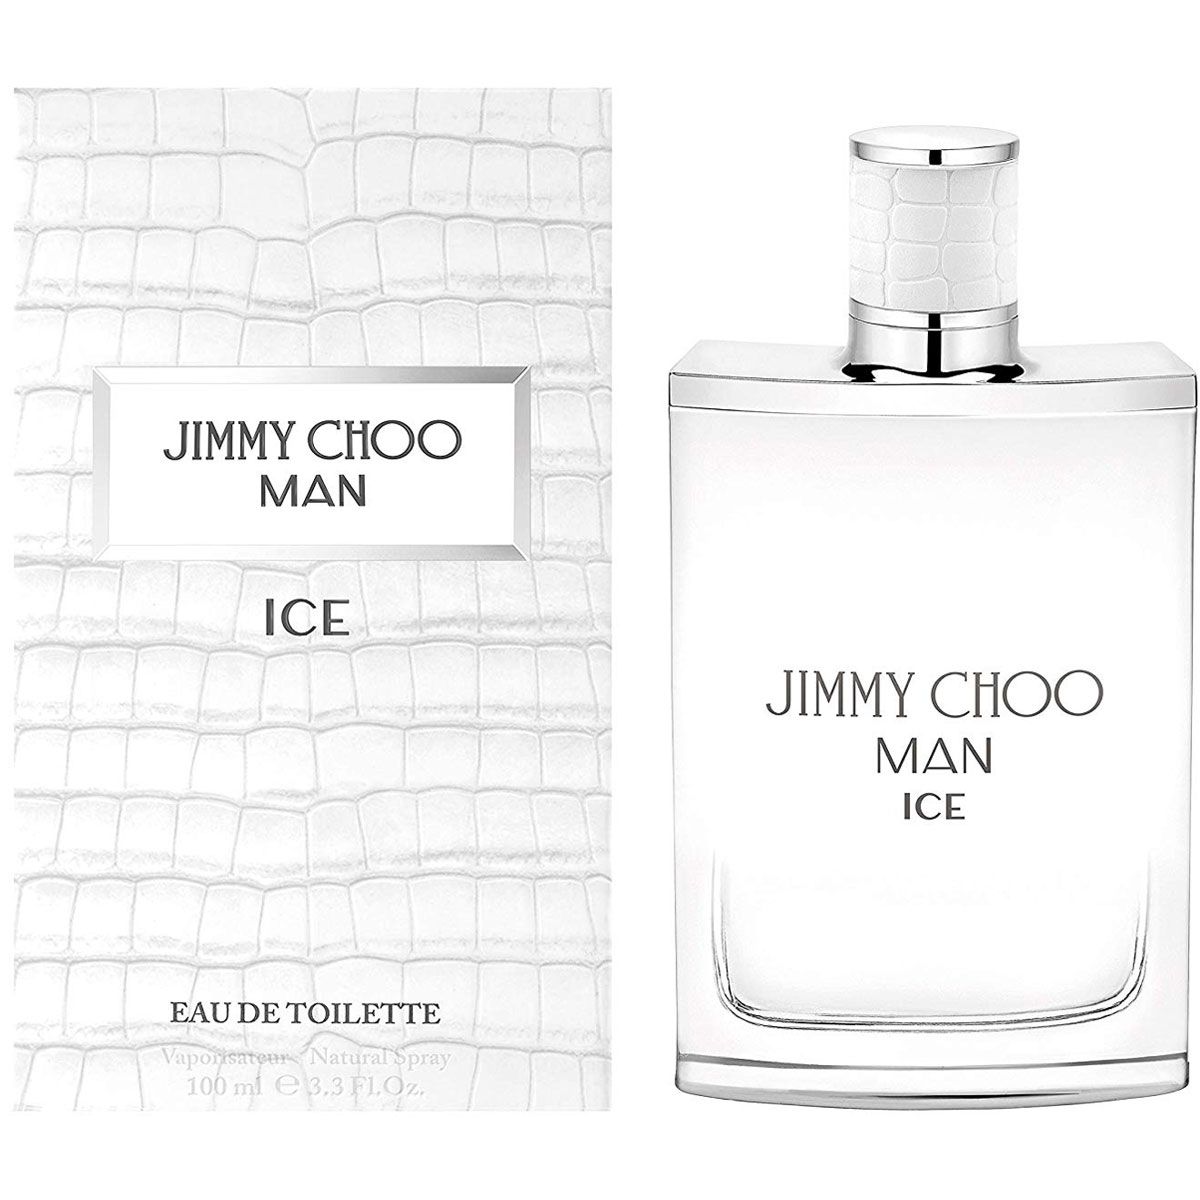  Jimmy Choo Man Ice 